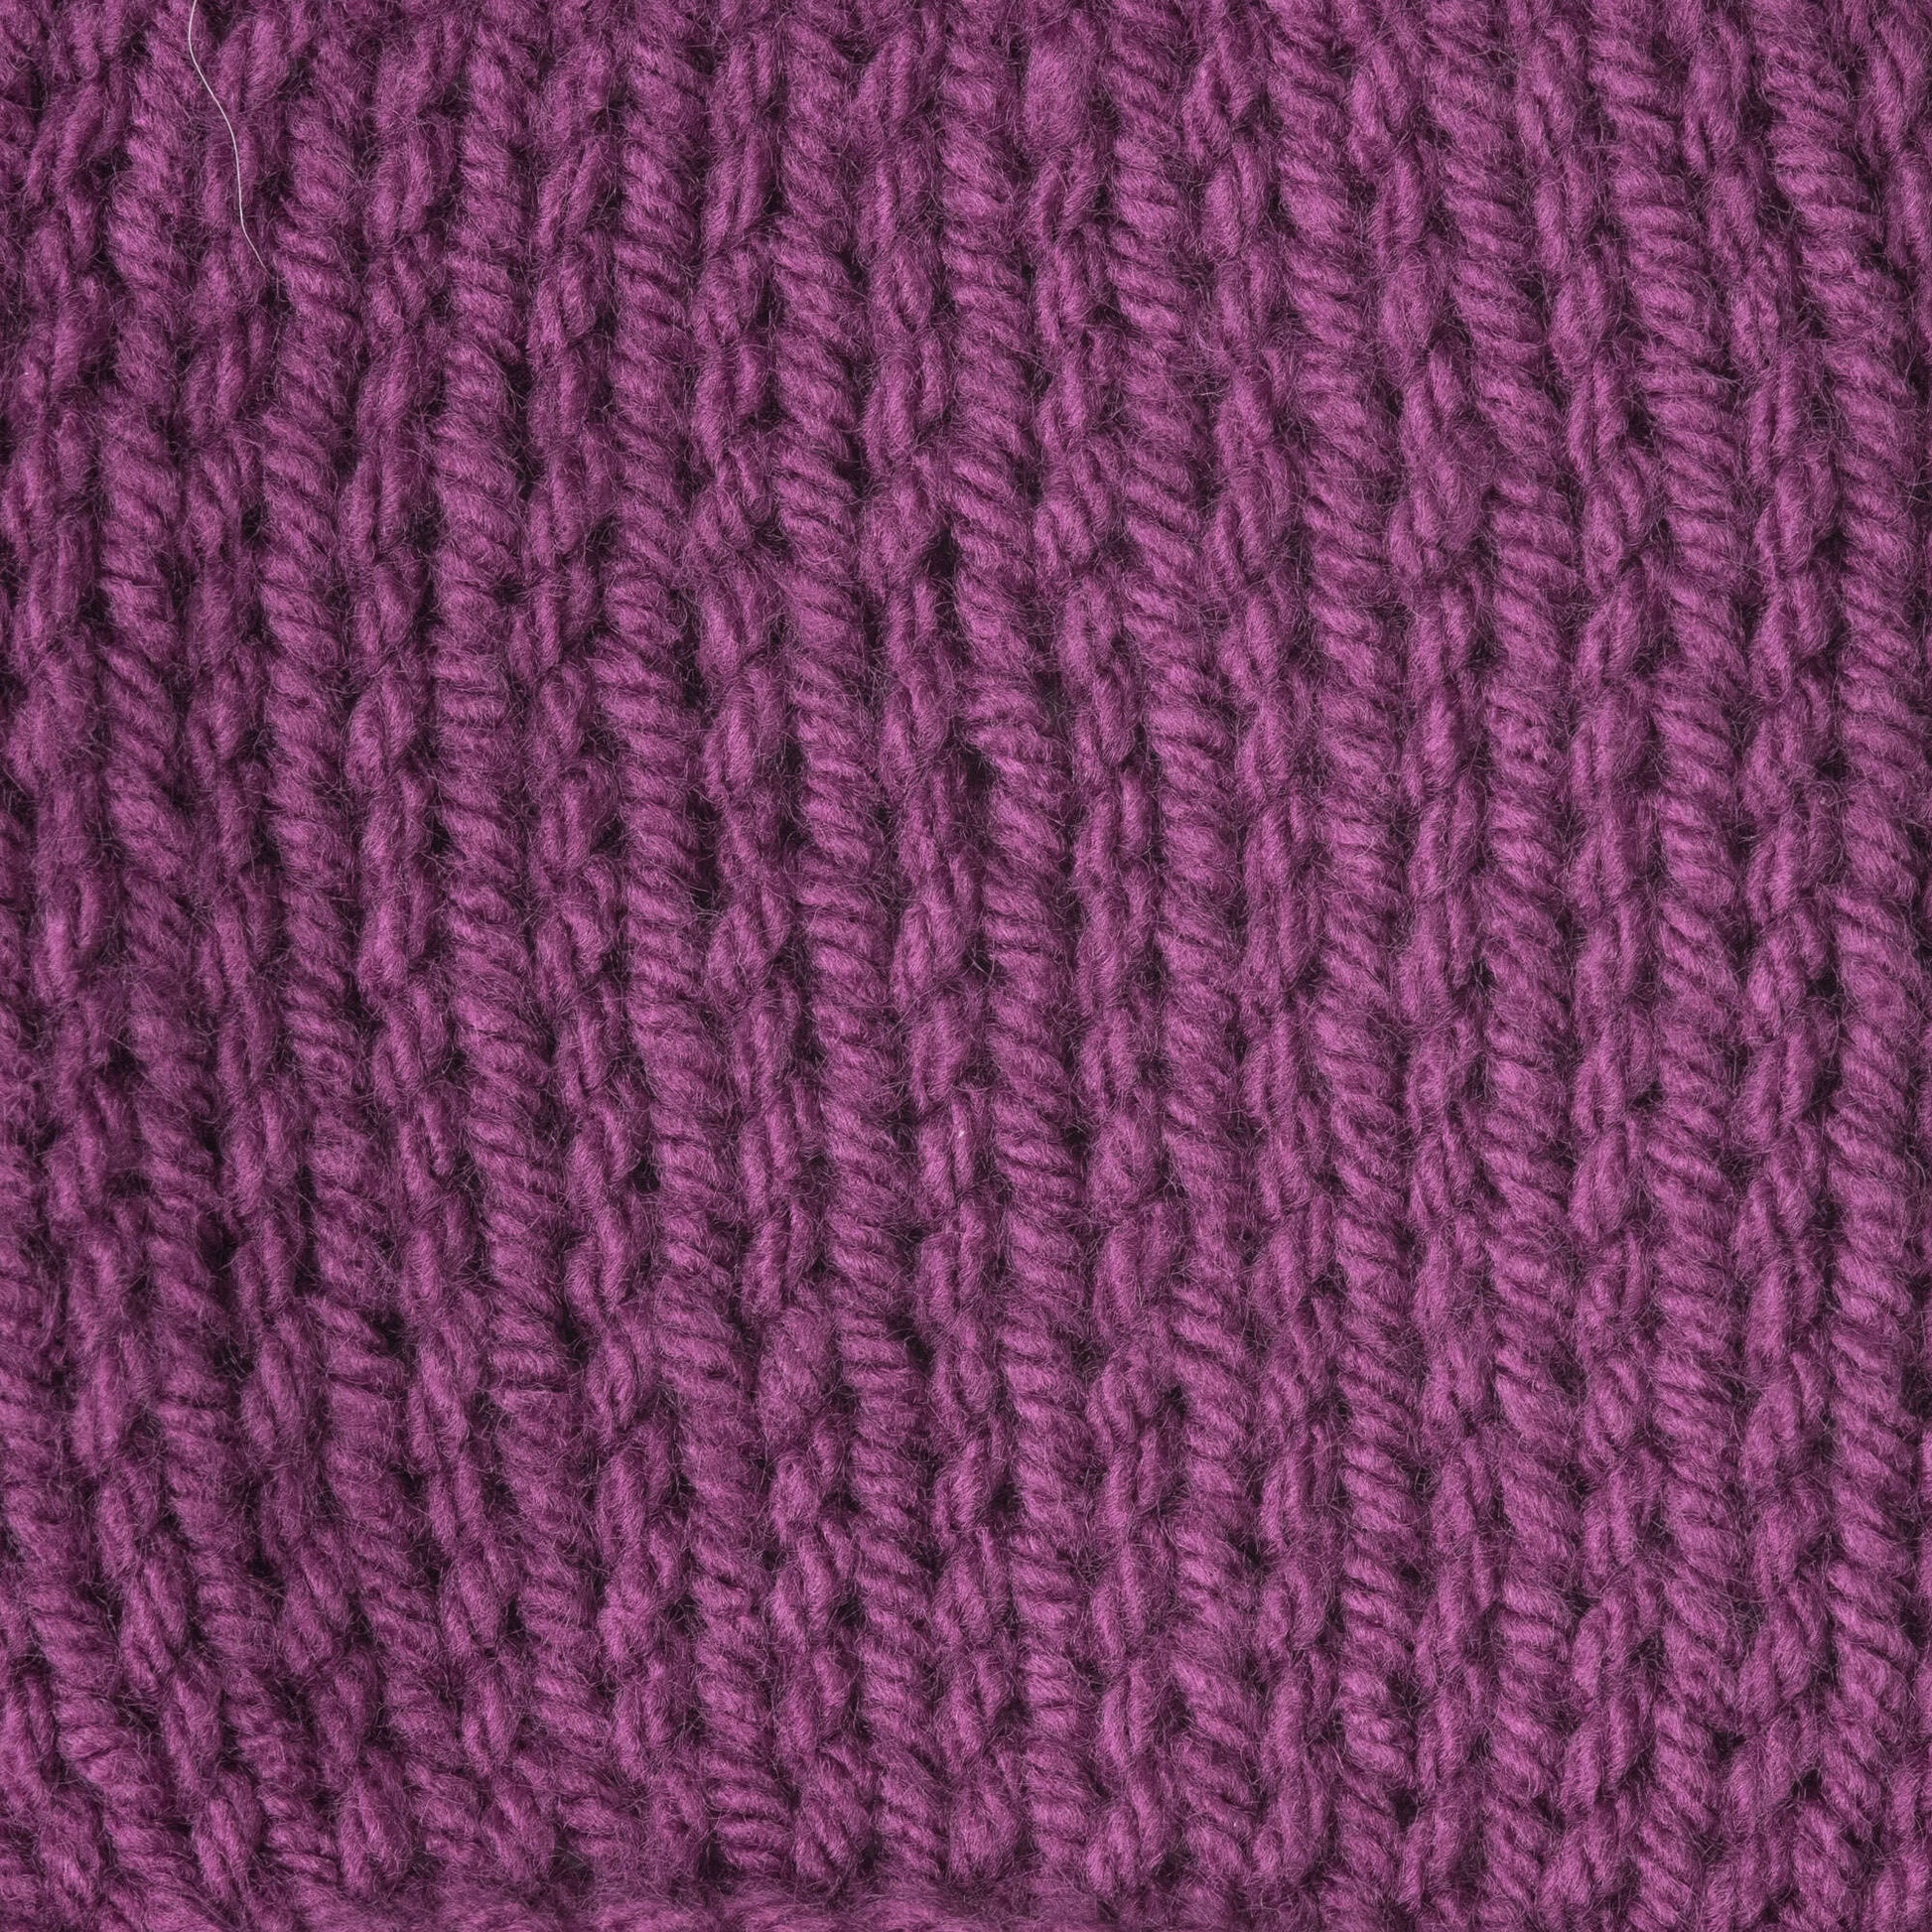 Spinrite Caron Fabric Yarn, 1-Pound, Azure 327563